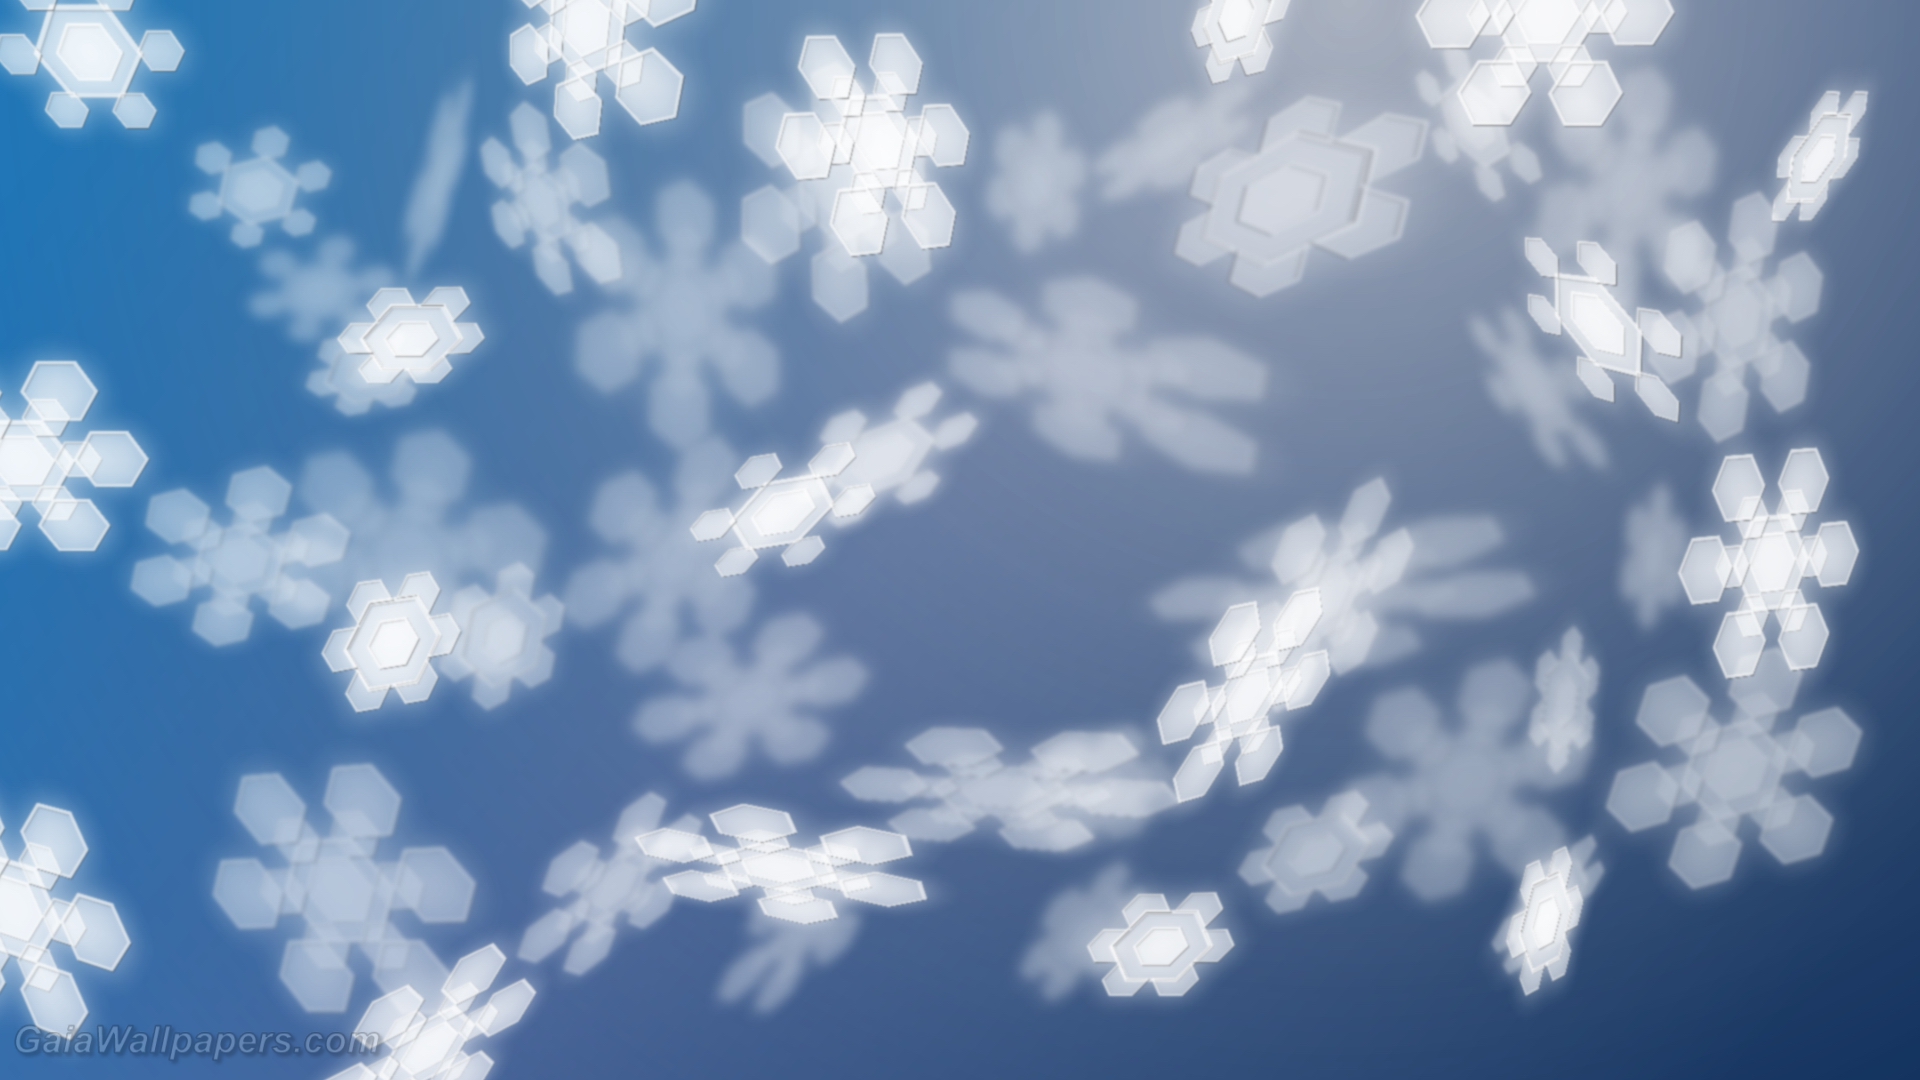 Virtual snowflakes - Free desktop wallpapers